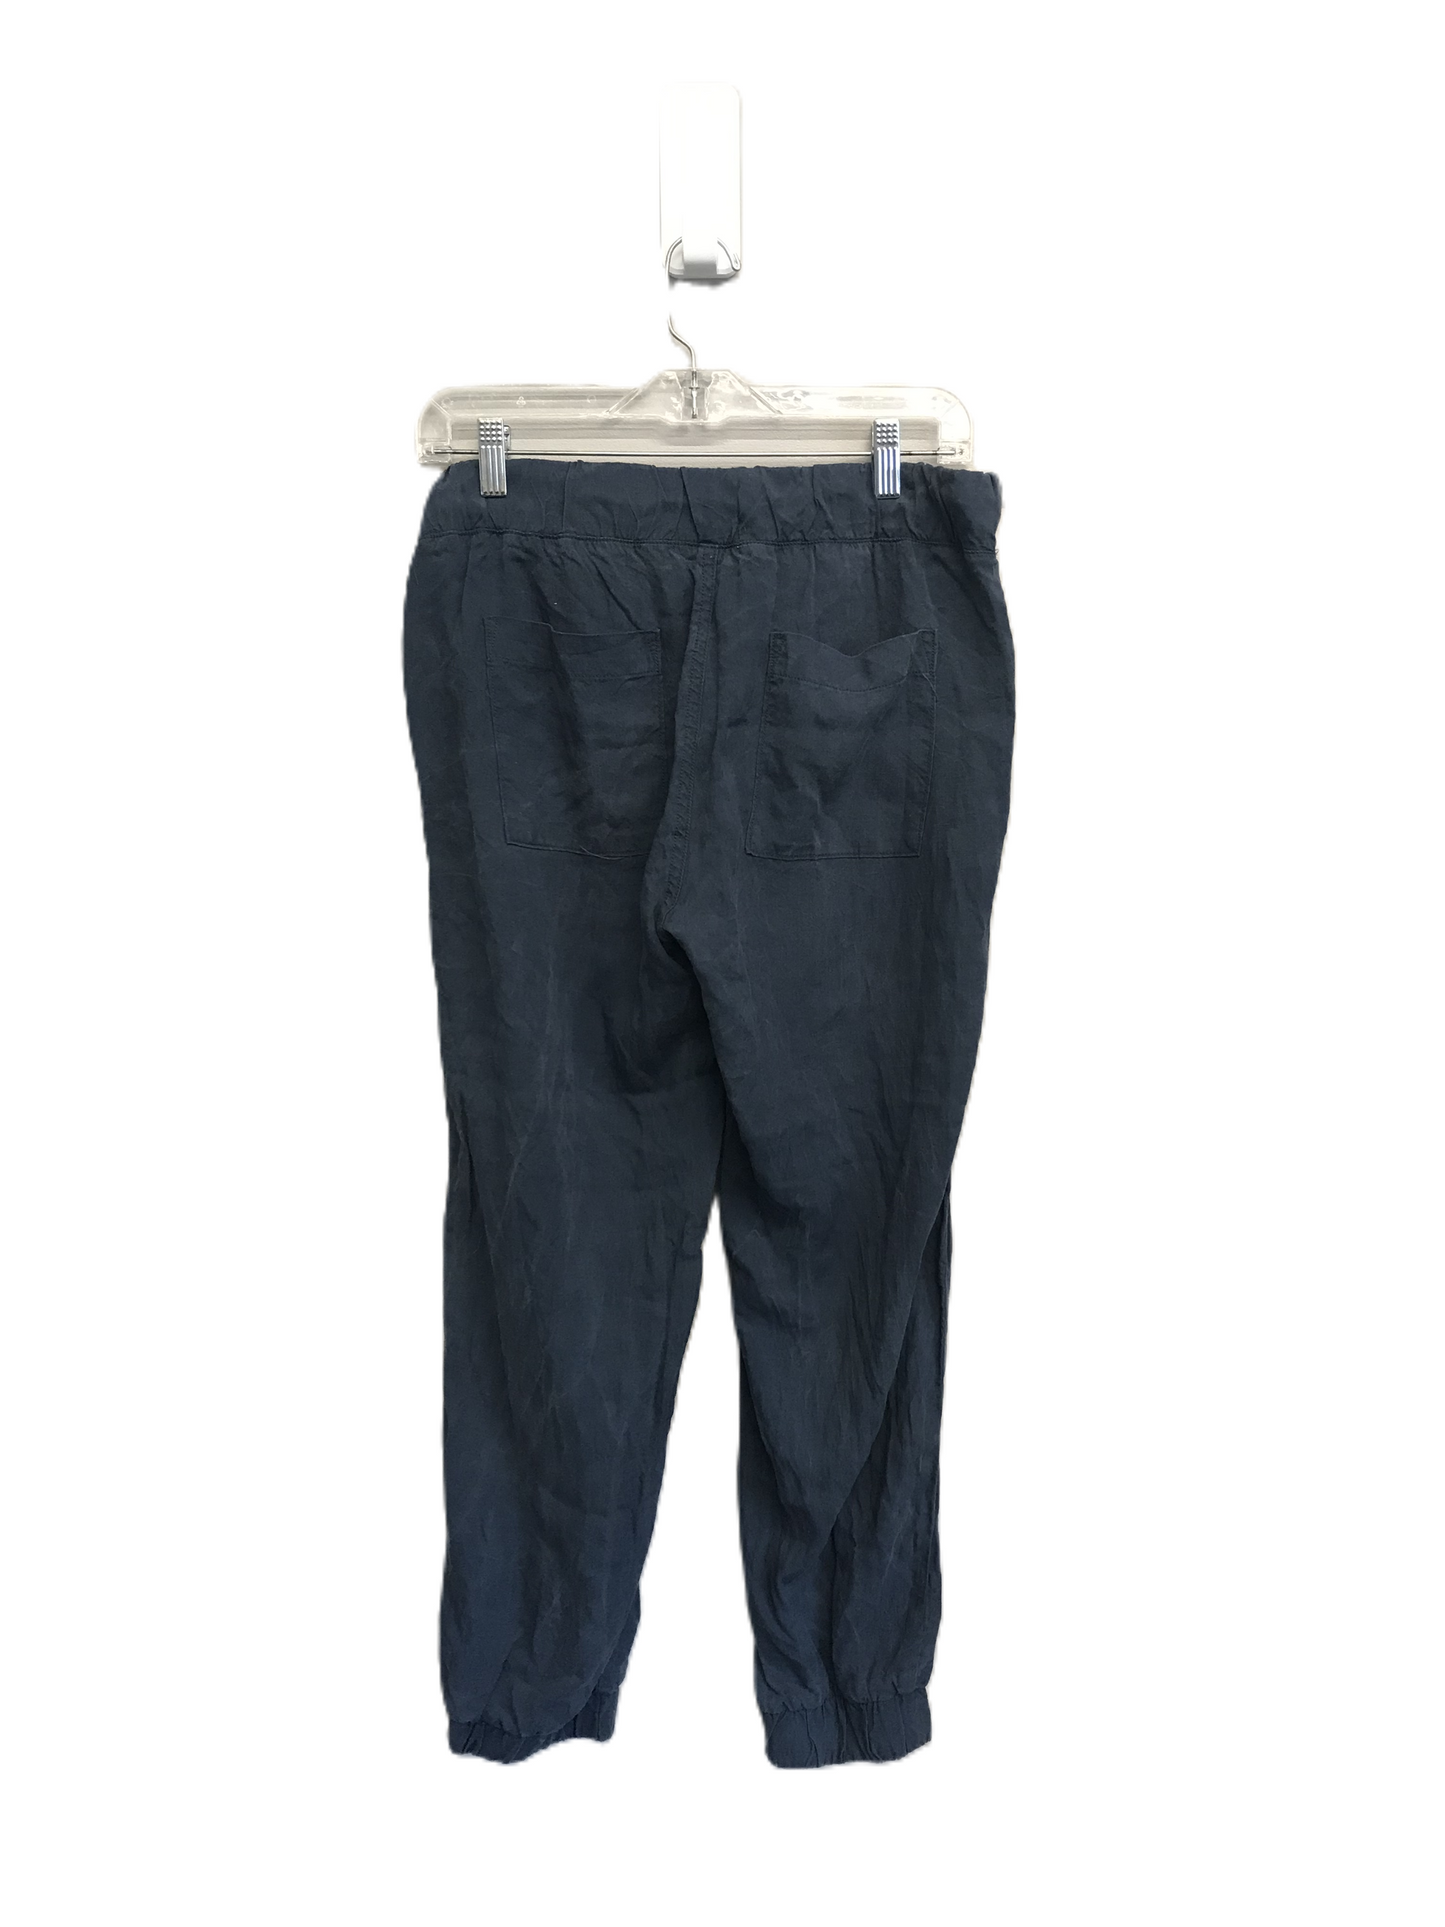 Blue Pants Lounge By Cloth & Stone, Size: 8